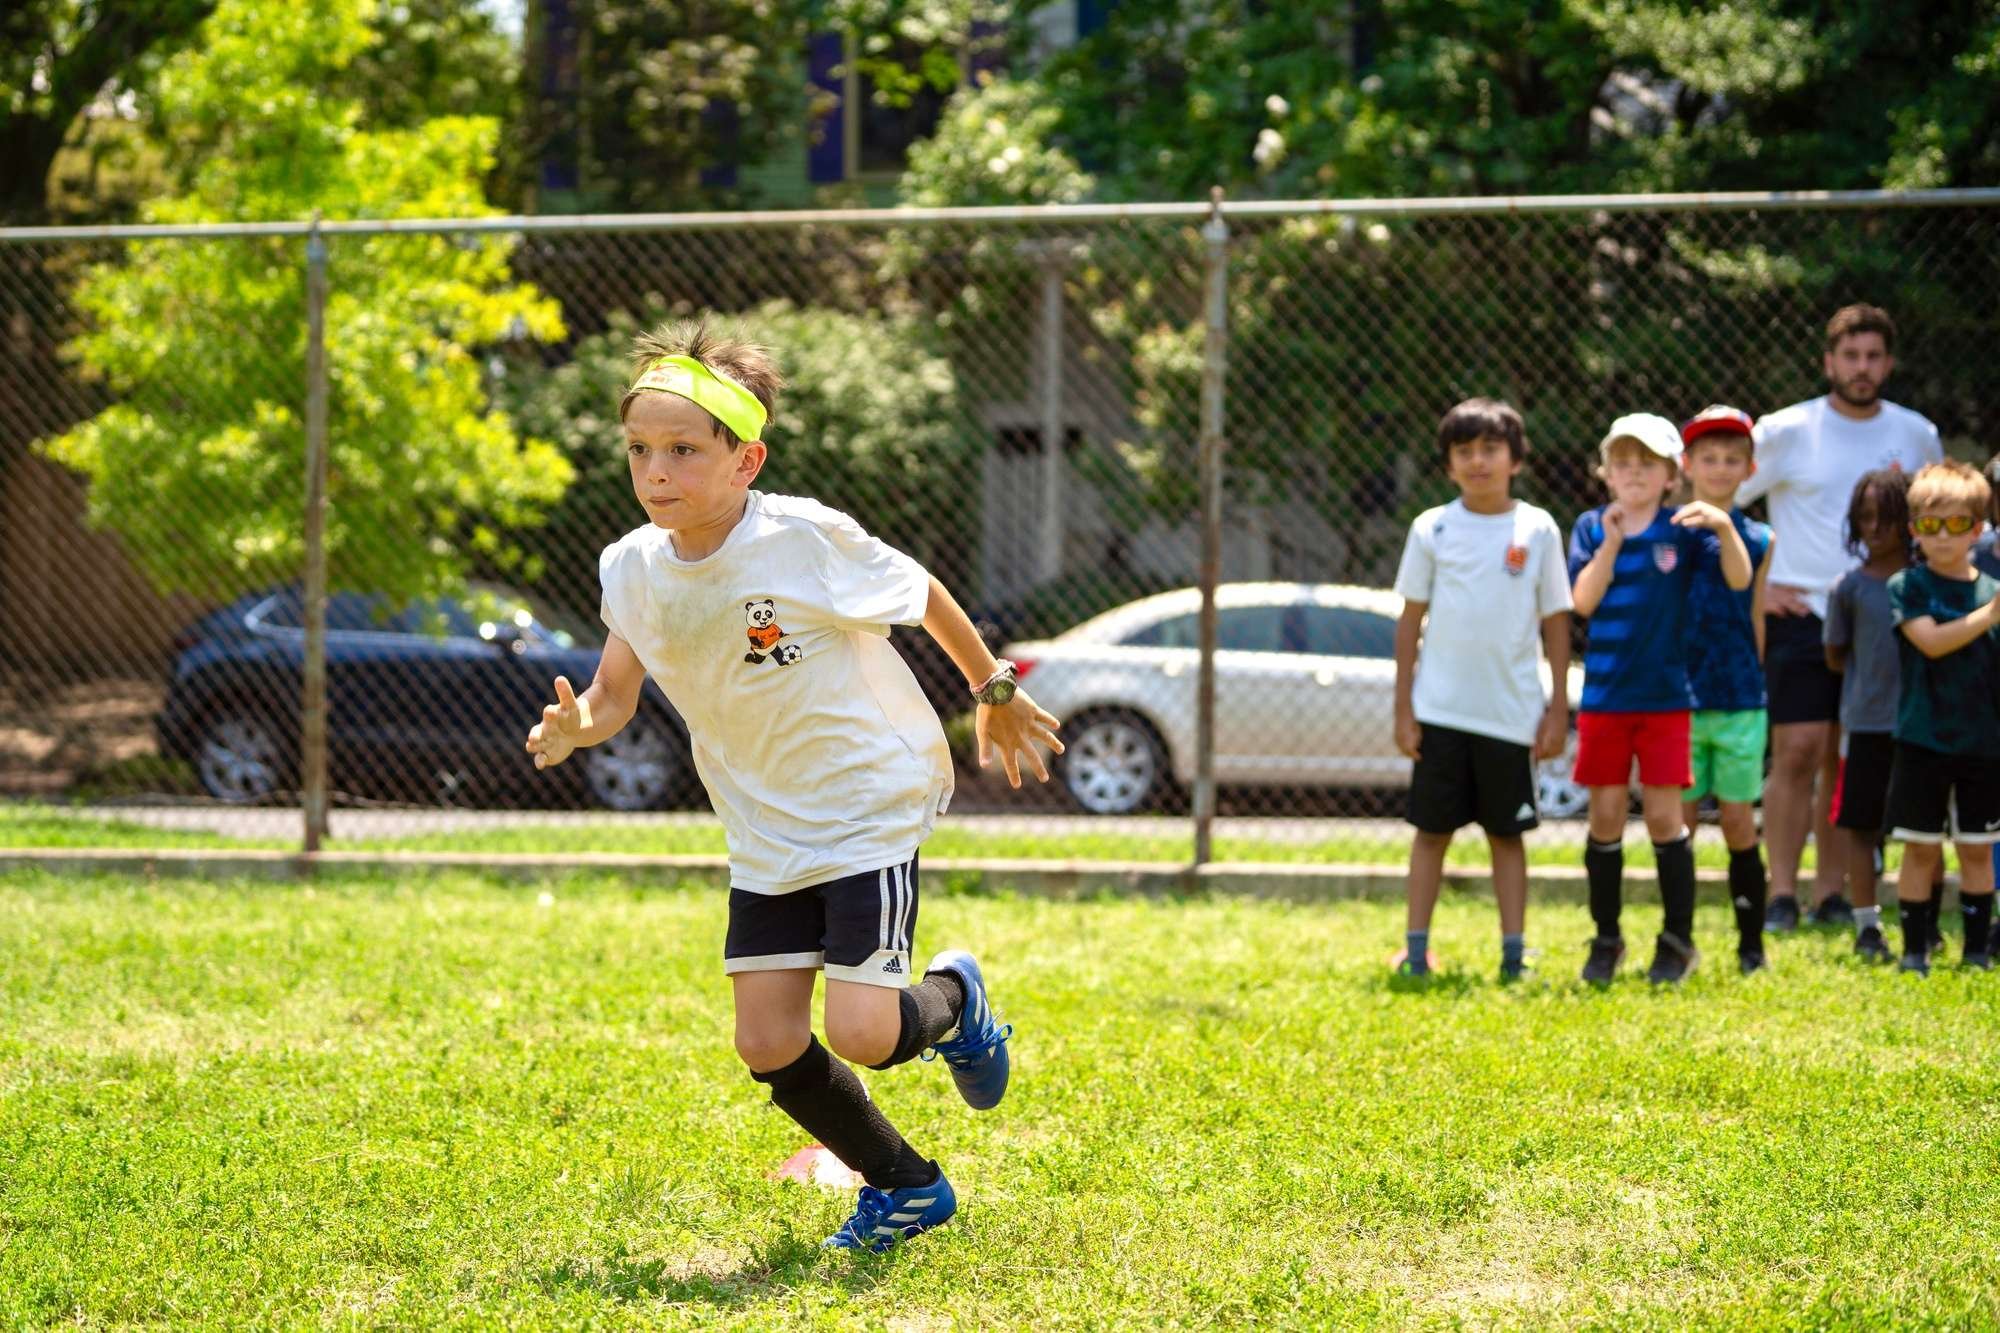 Dc-way-soccer-club-for-kids-in-washington-dc-summer-camp-at-tyler-elementary-school- 0125.jpg